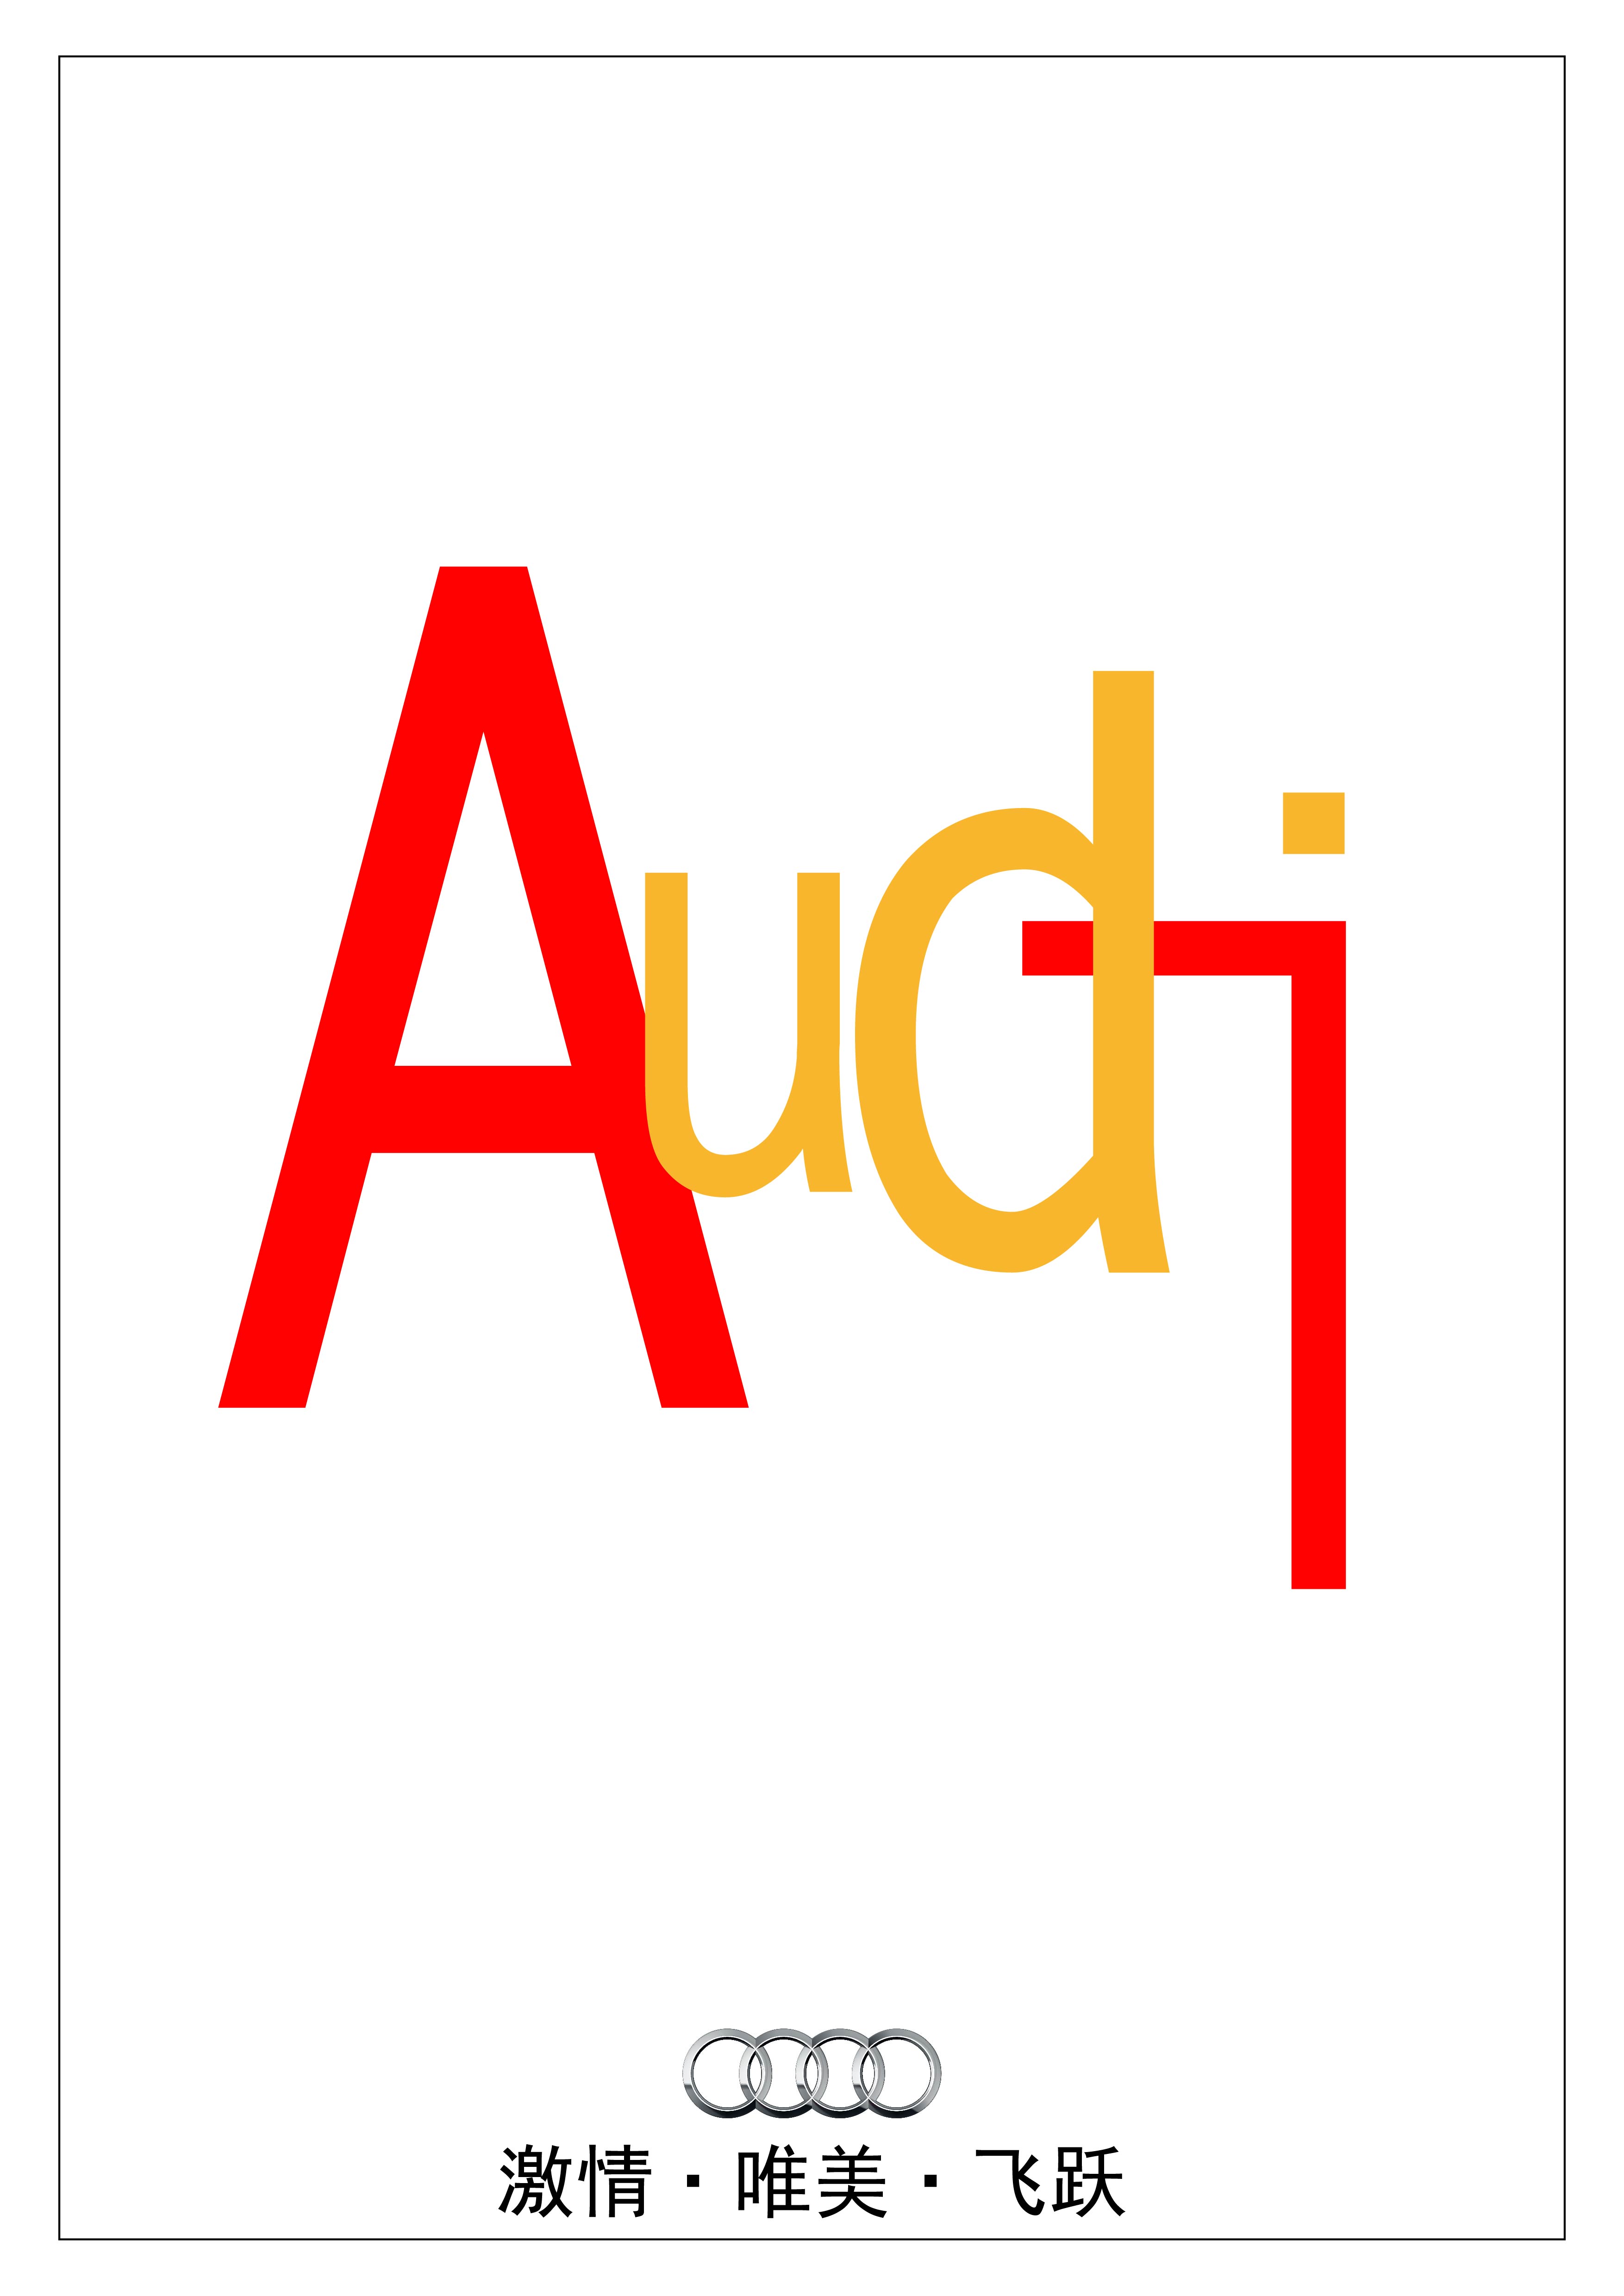 audi的英文进行字体设计,与新品a7结合,红色冲劲动力,黄色活力希望.